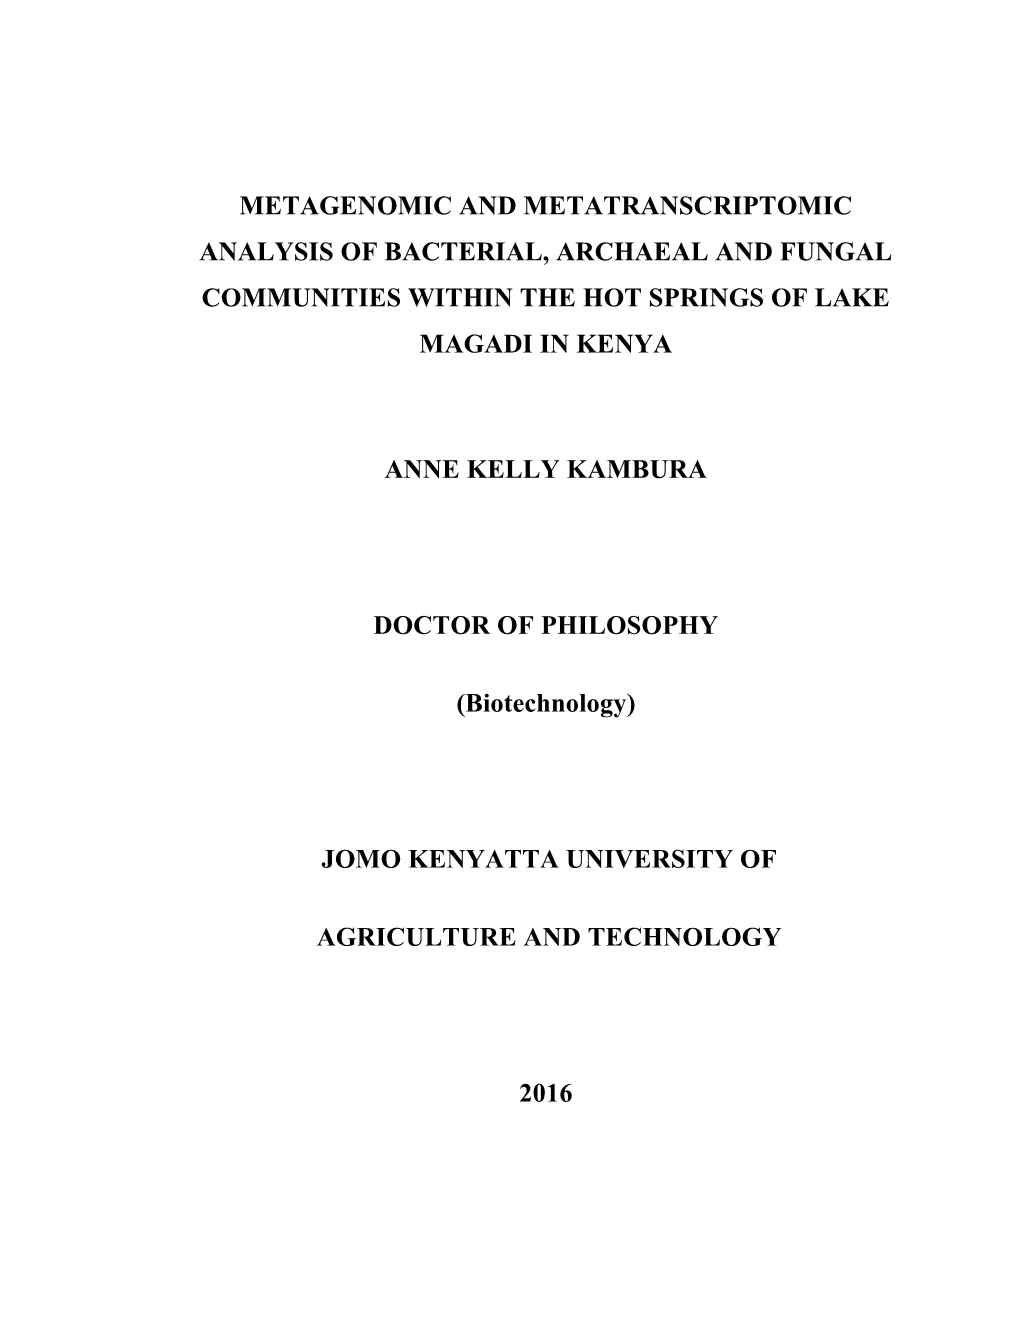 Metagenomic and Metatranscriptomic Analysis of Bacterial, Archaeal and Fungal Communities Within the Hot Springs of Lake Magadi in Kenya